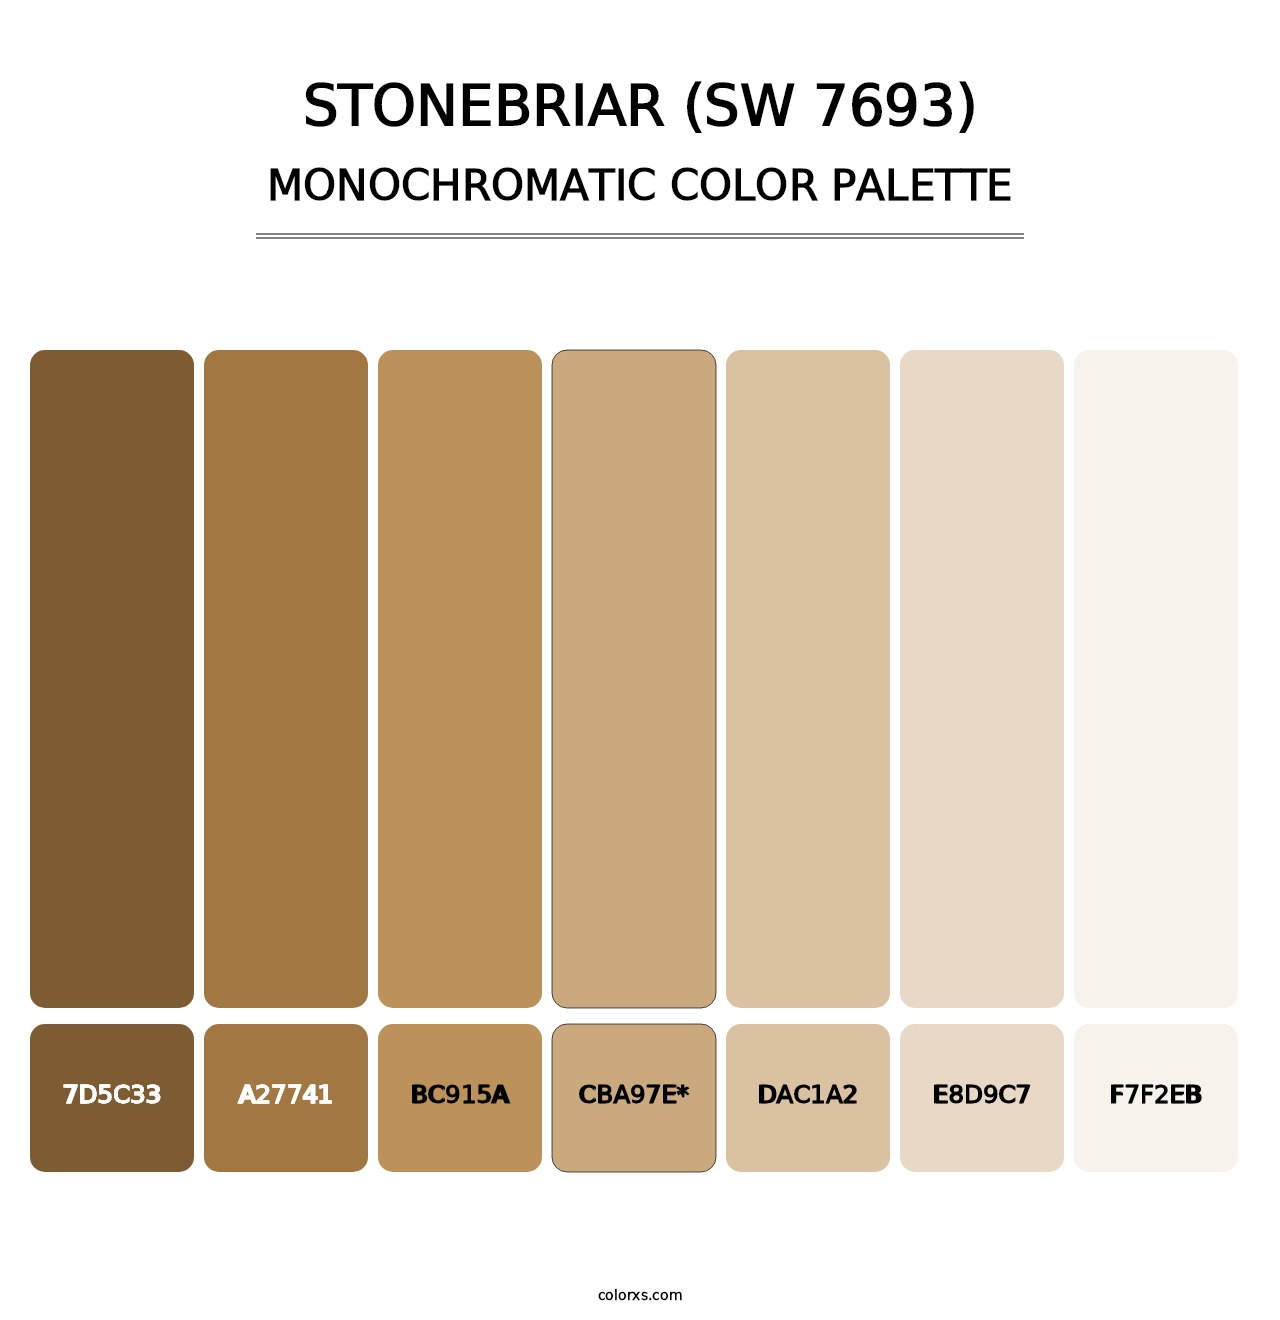 Stonebriar (SW 7693) - Monochromatic Color Palette